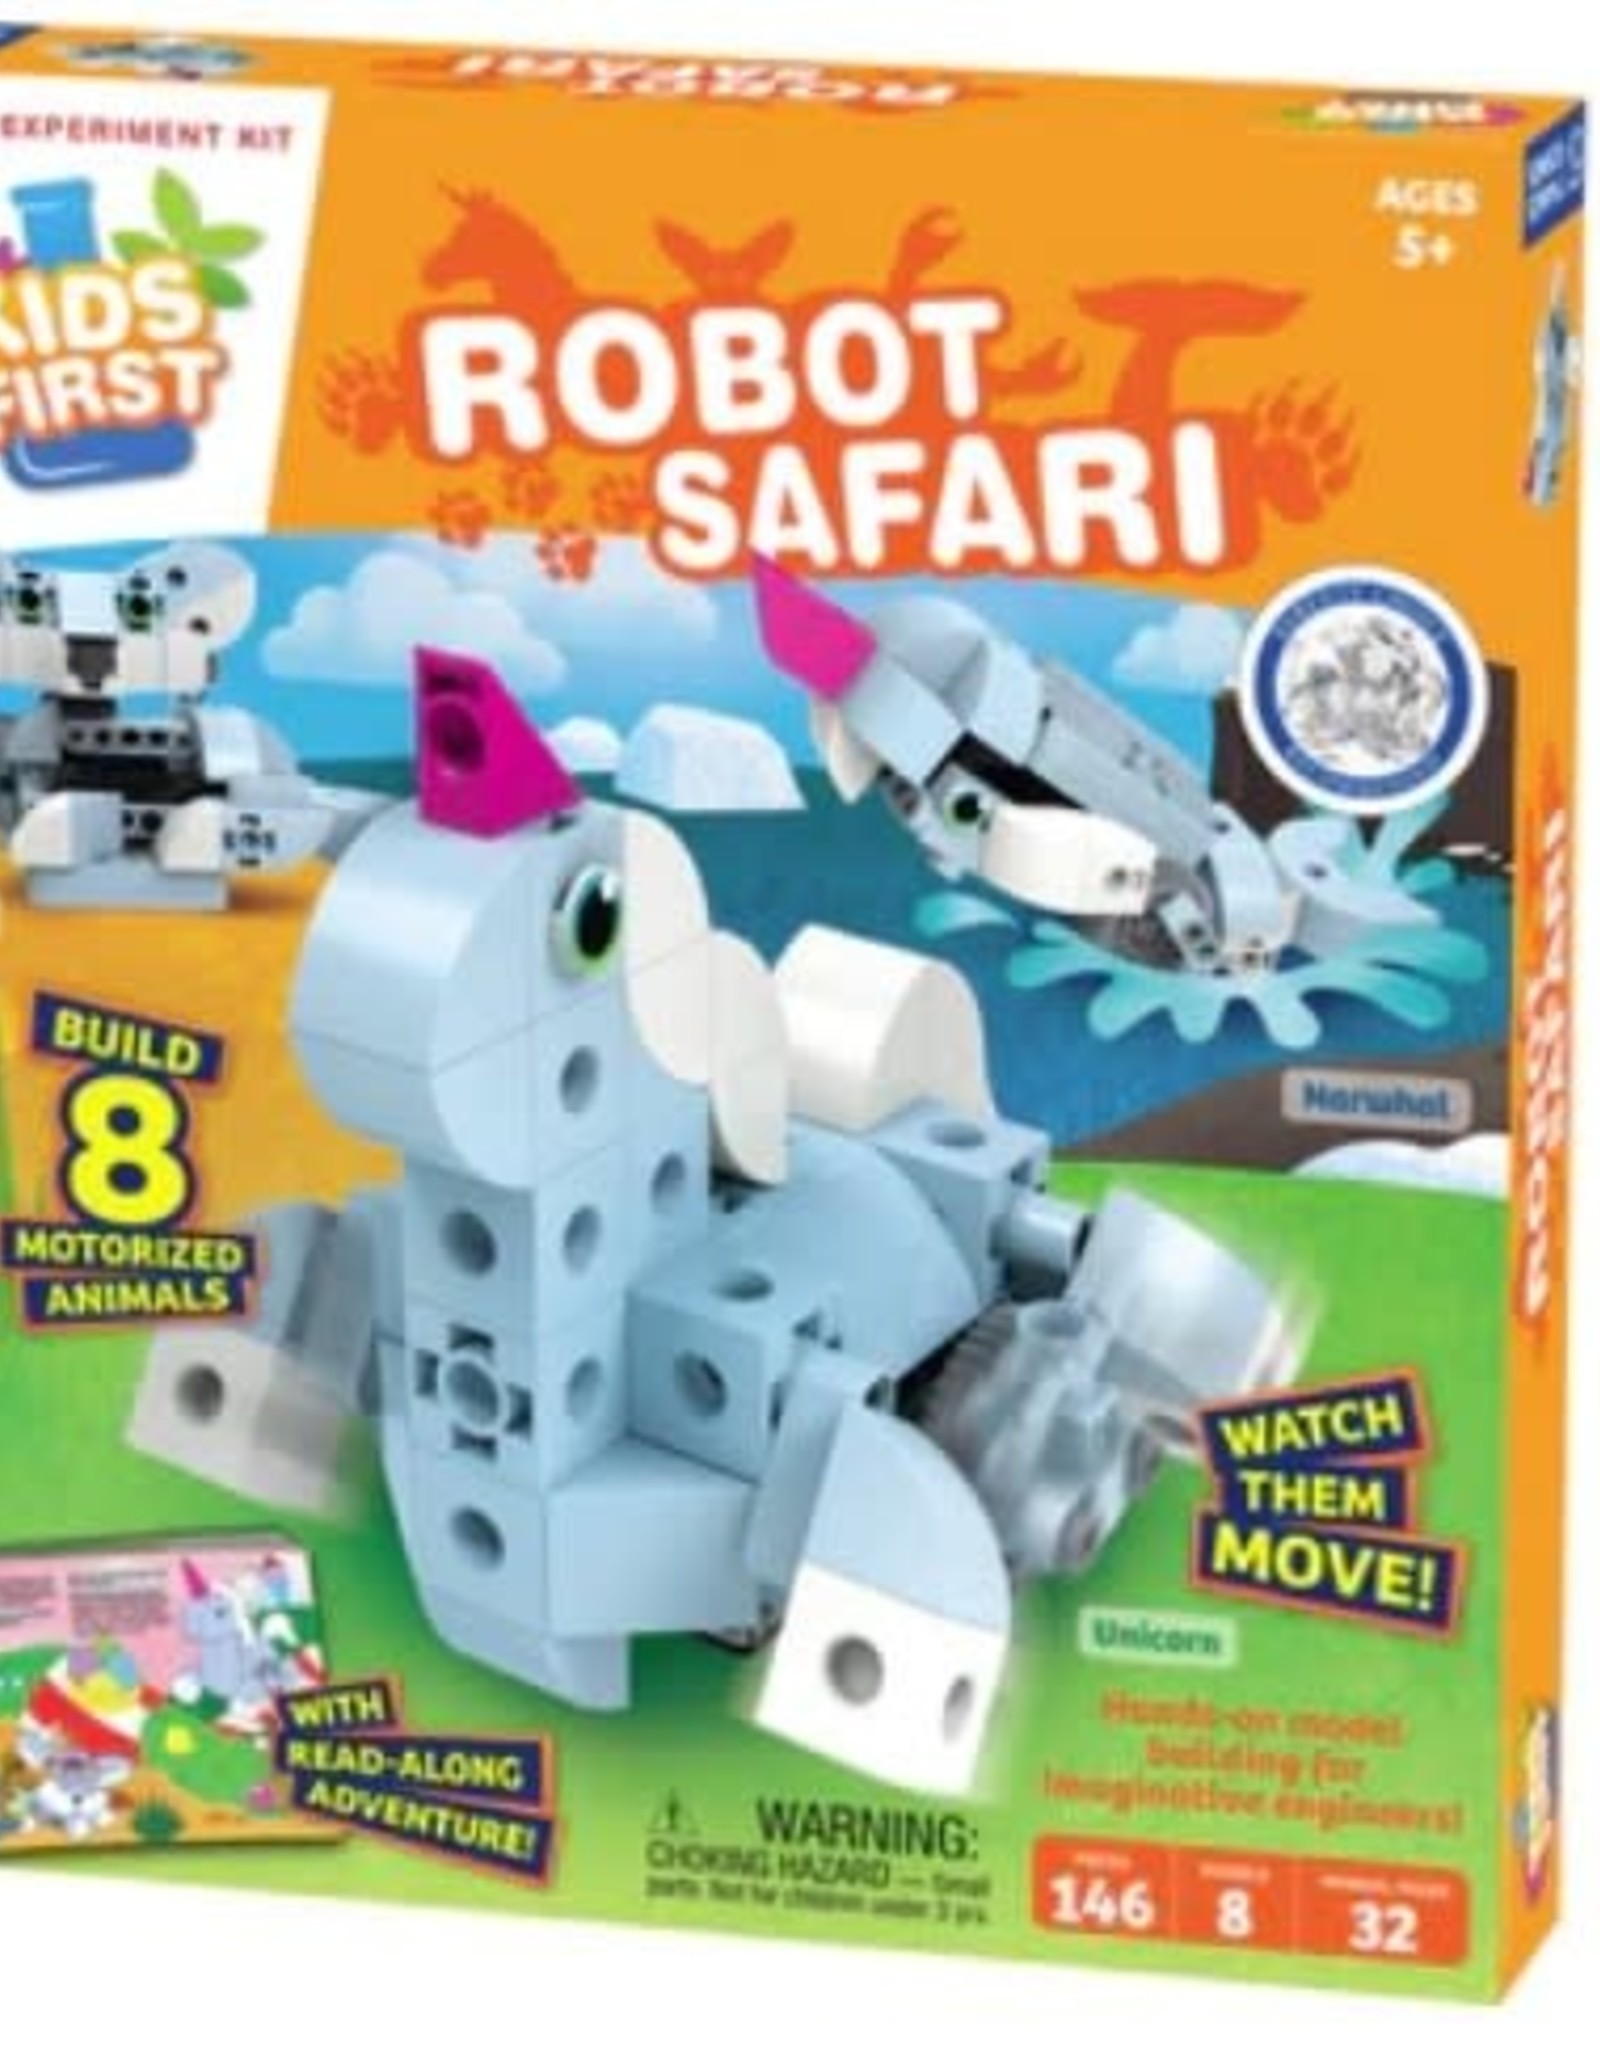 Thames & Kosmos KIDS FIRST - ROBOT SAFARI - INTRODUCTION TO MOTORIZED MACHINES